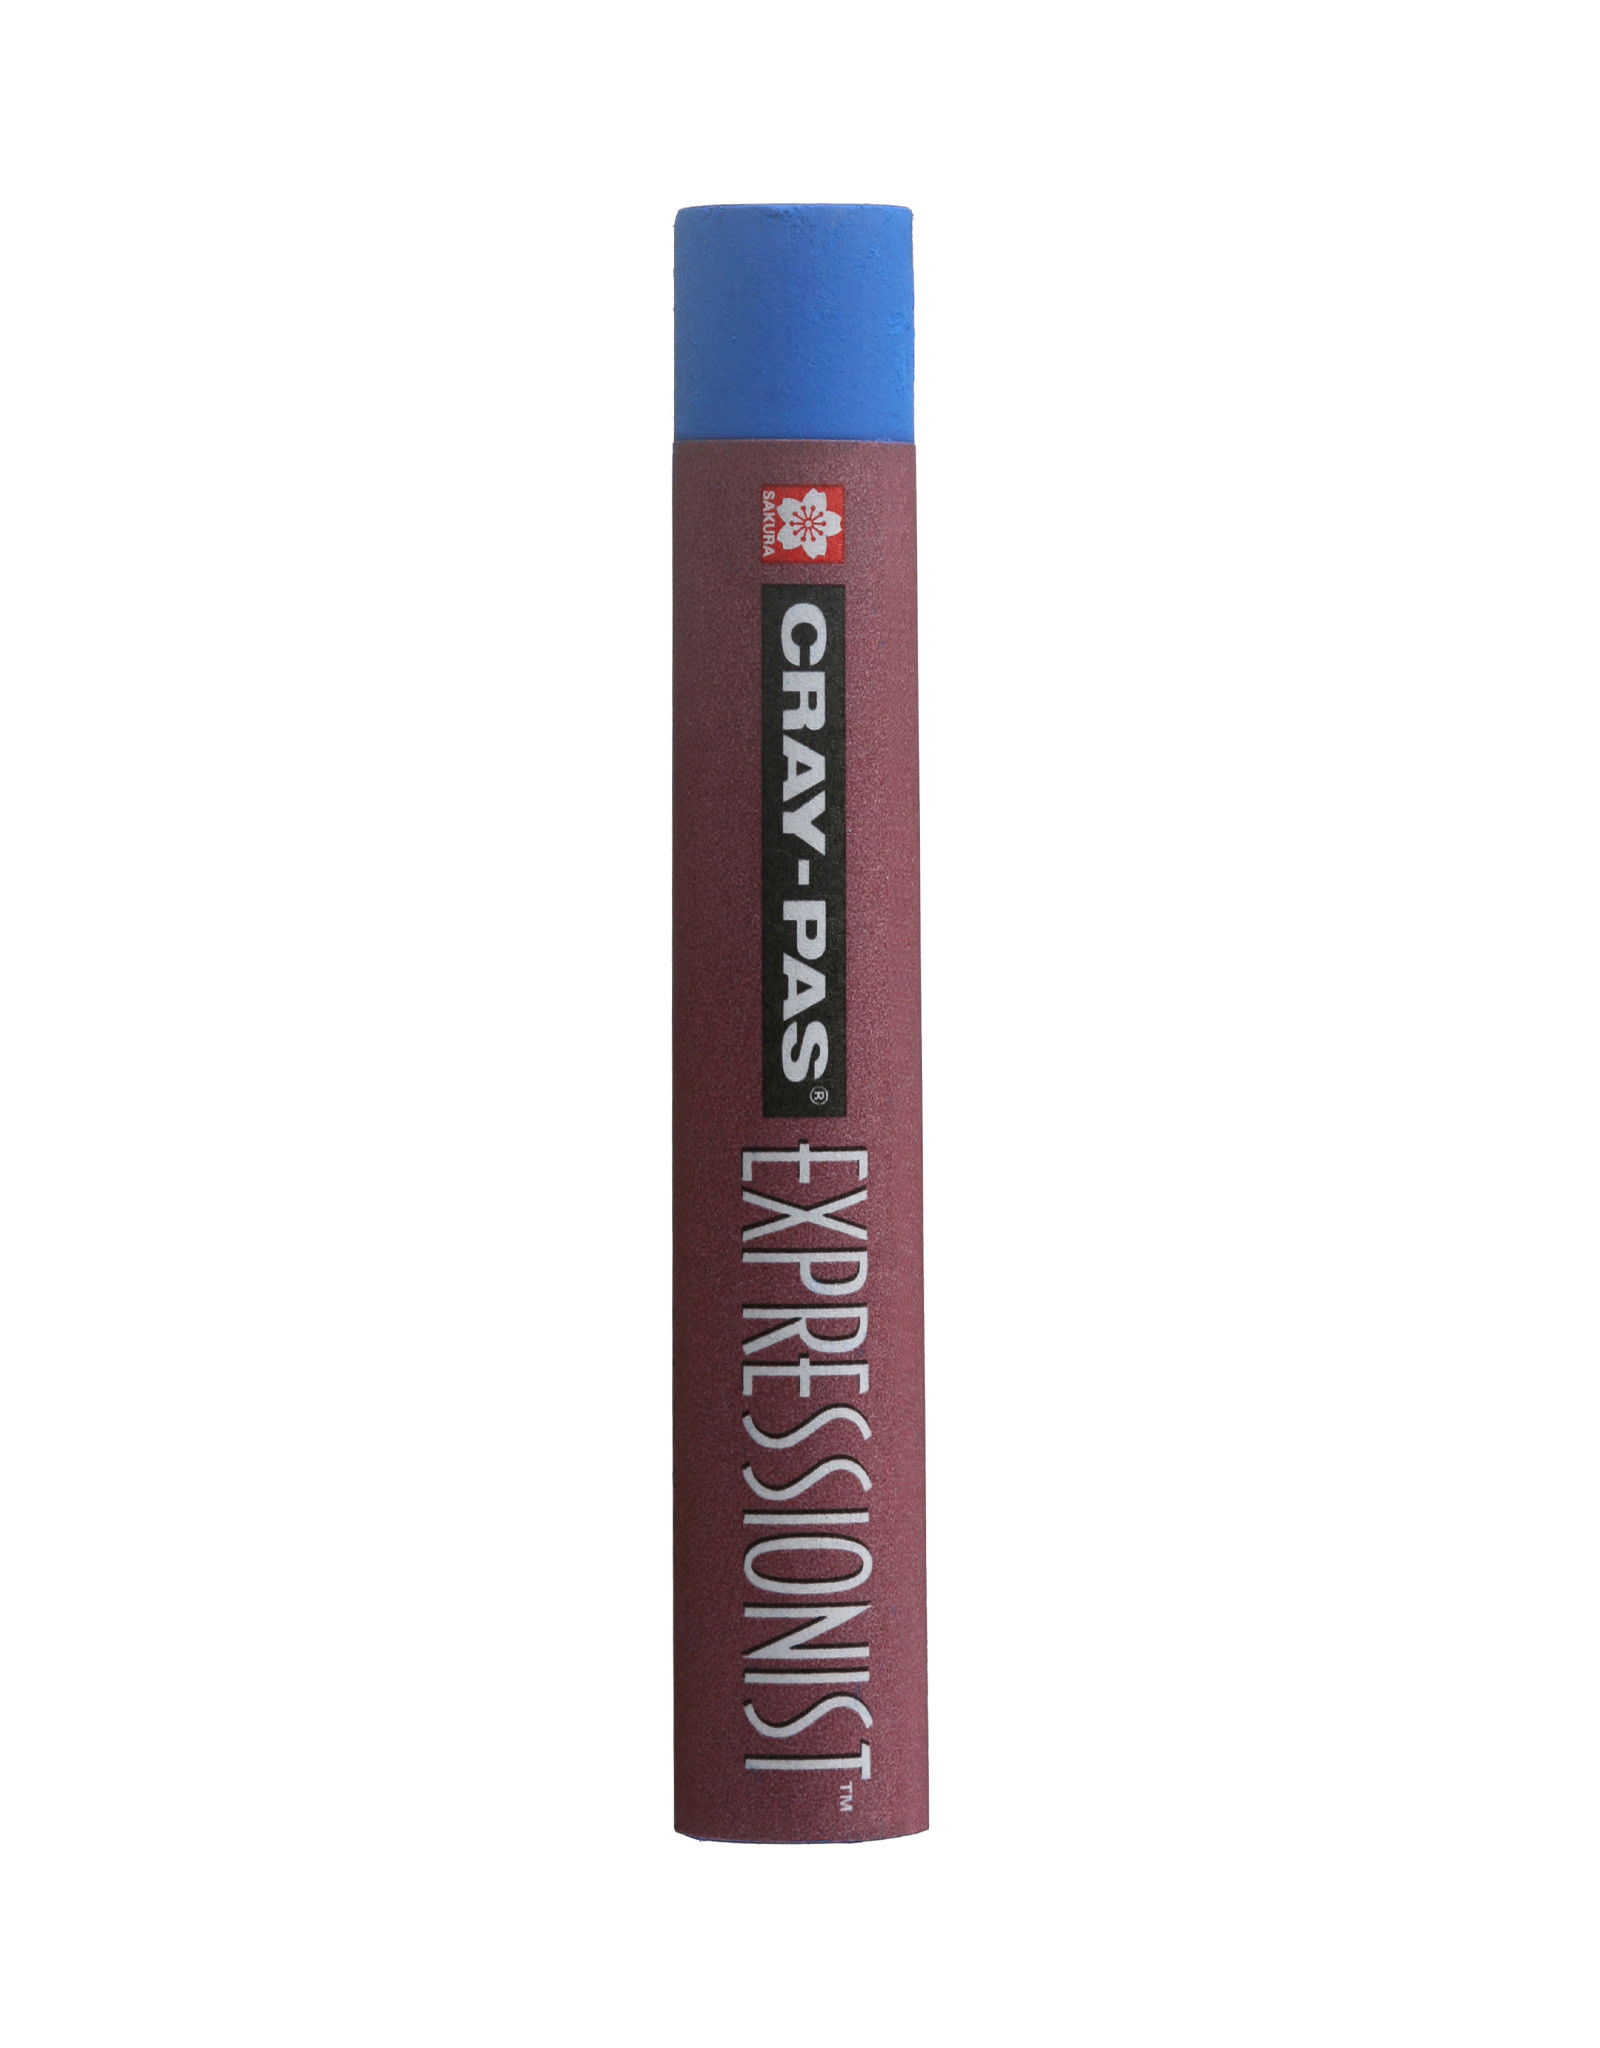 Sakura Cray-Pas Expressionist Oil Pastel, Cobalt Blue Hue